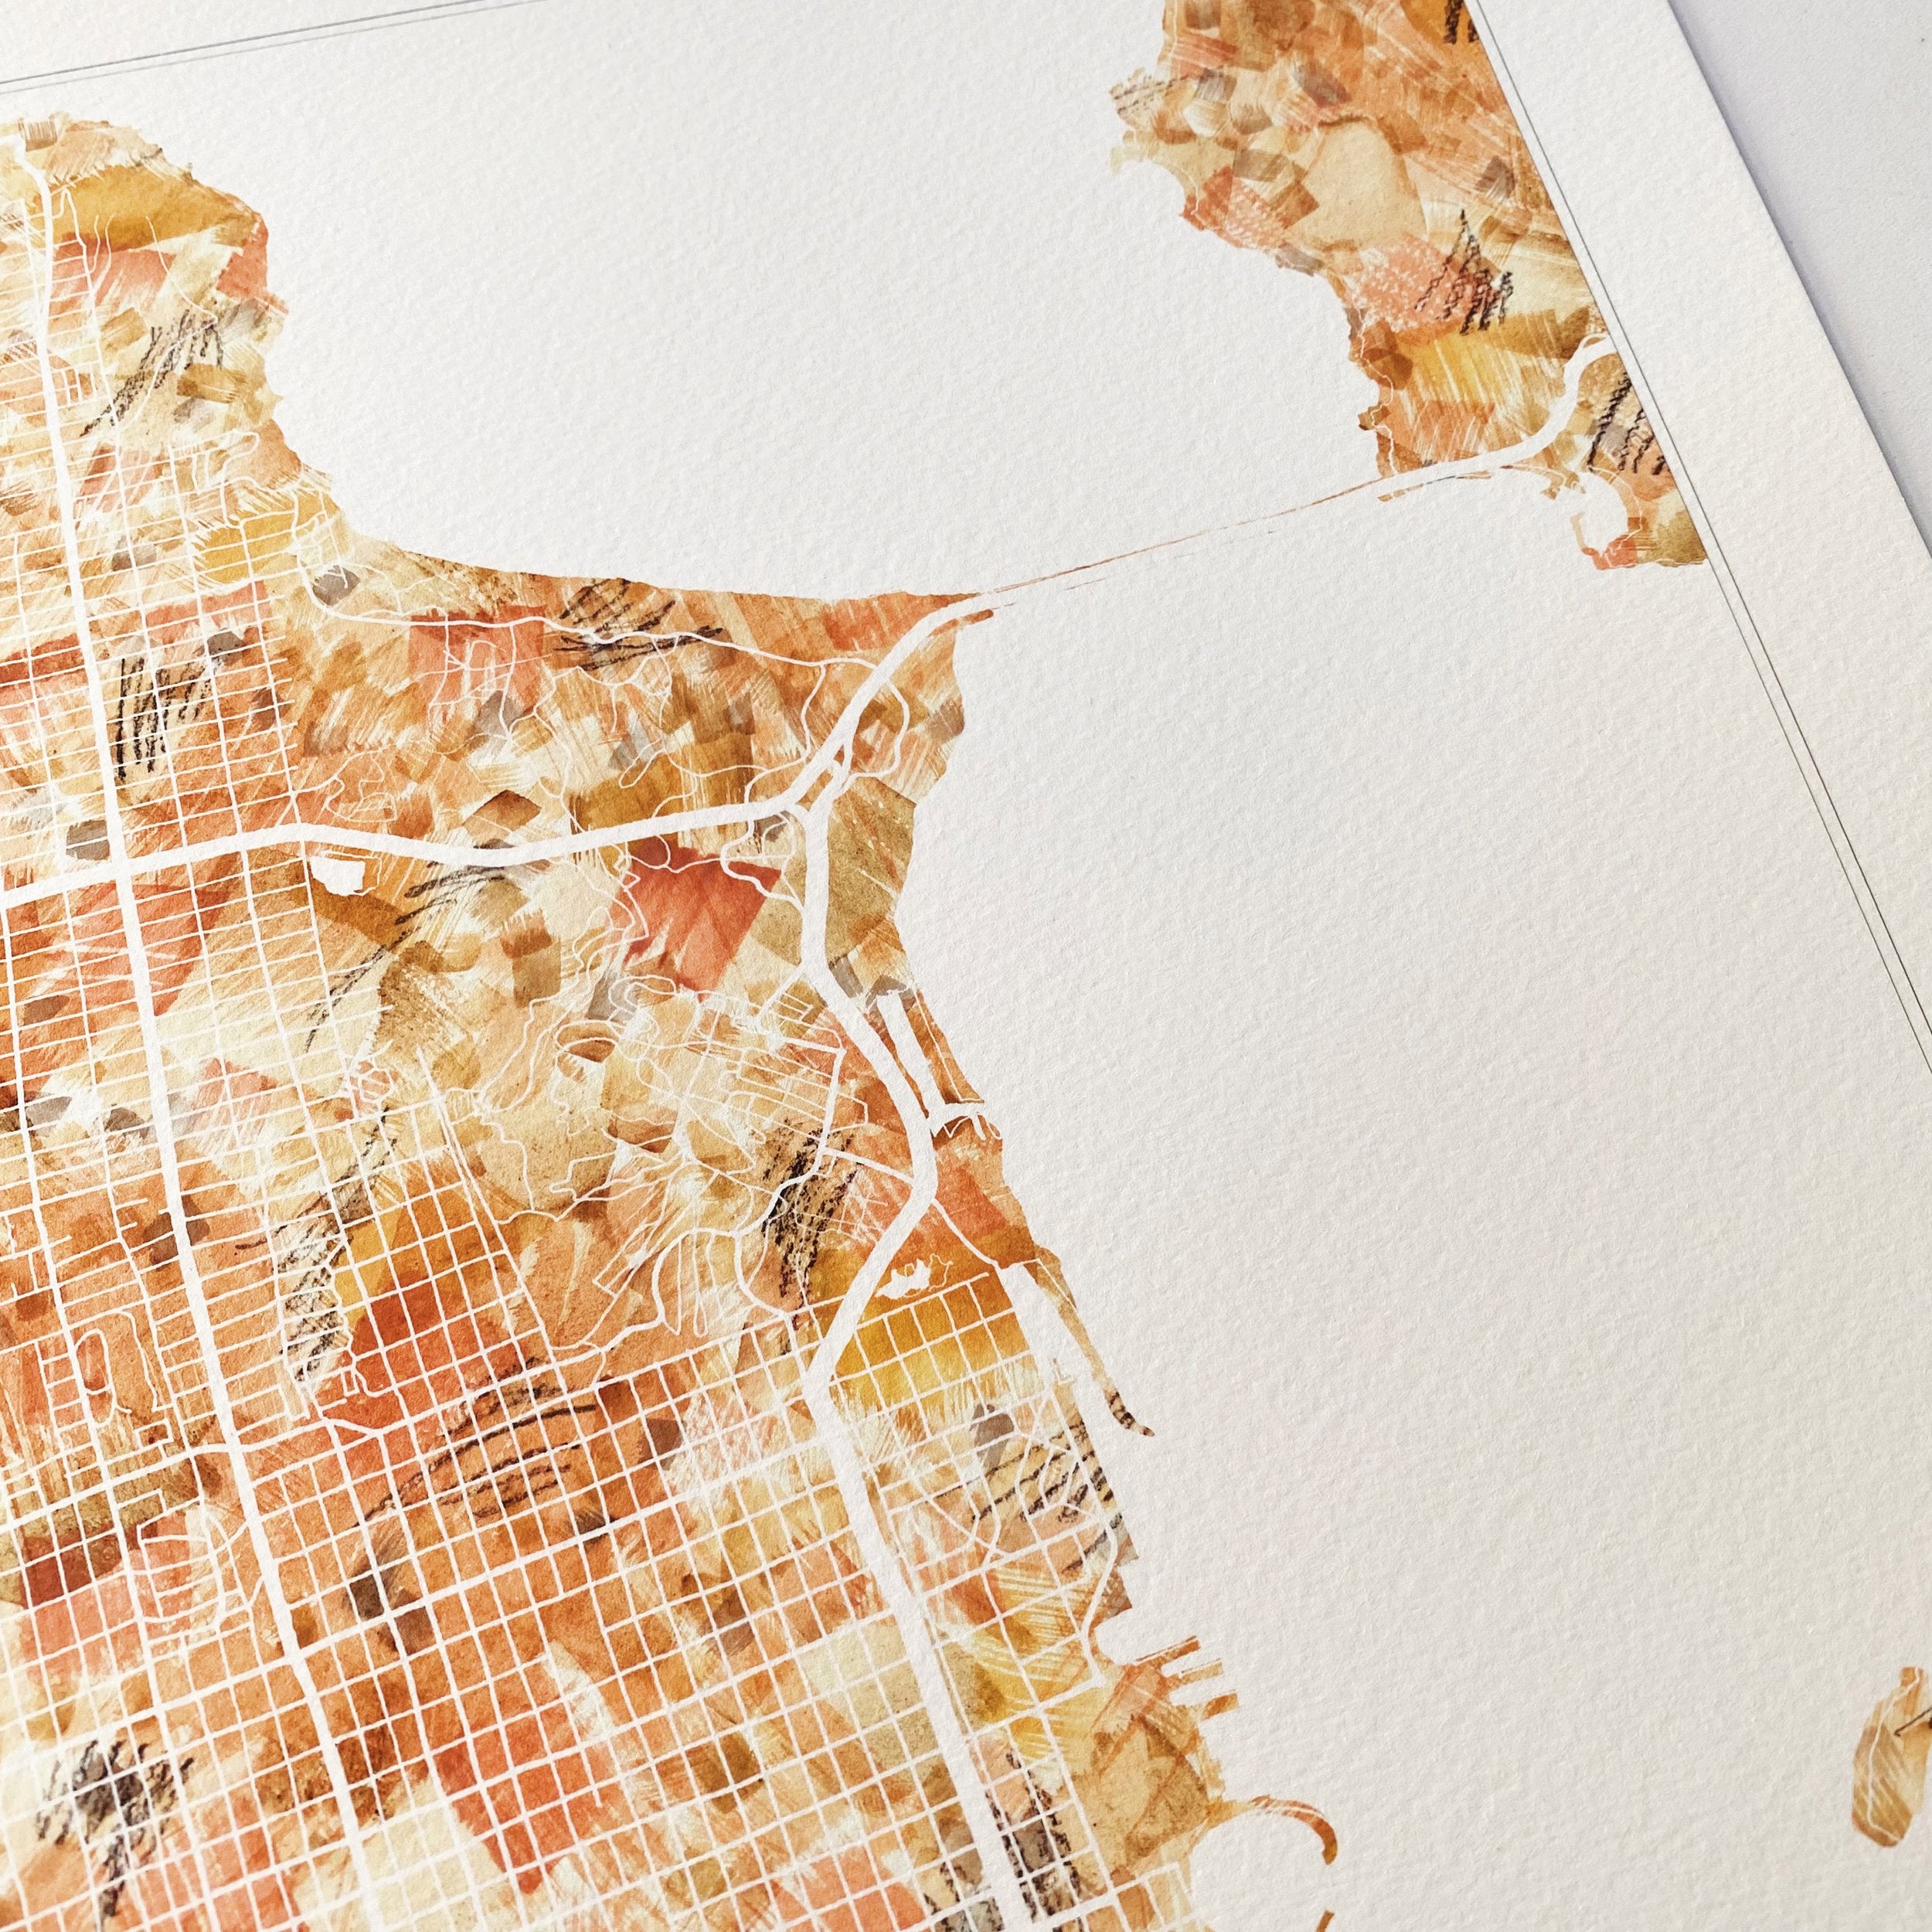 SAN FRANCISCO Urban Fabrics City Map: PRINT